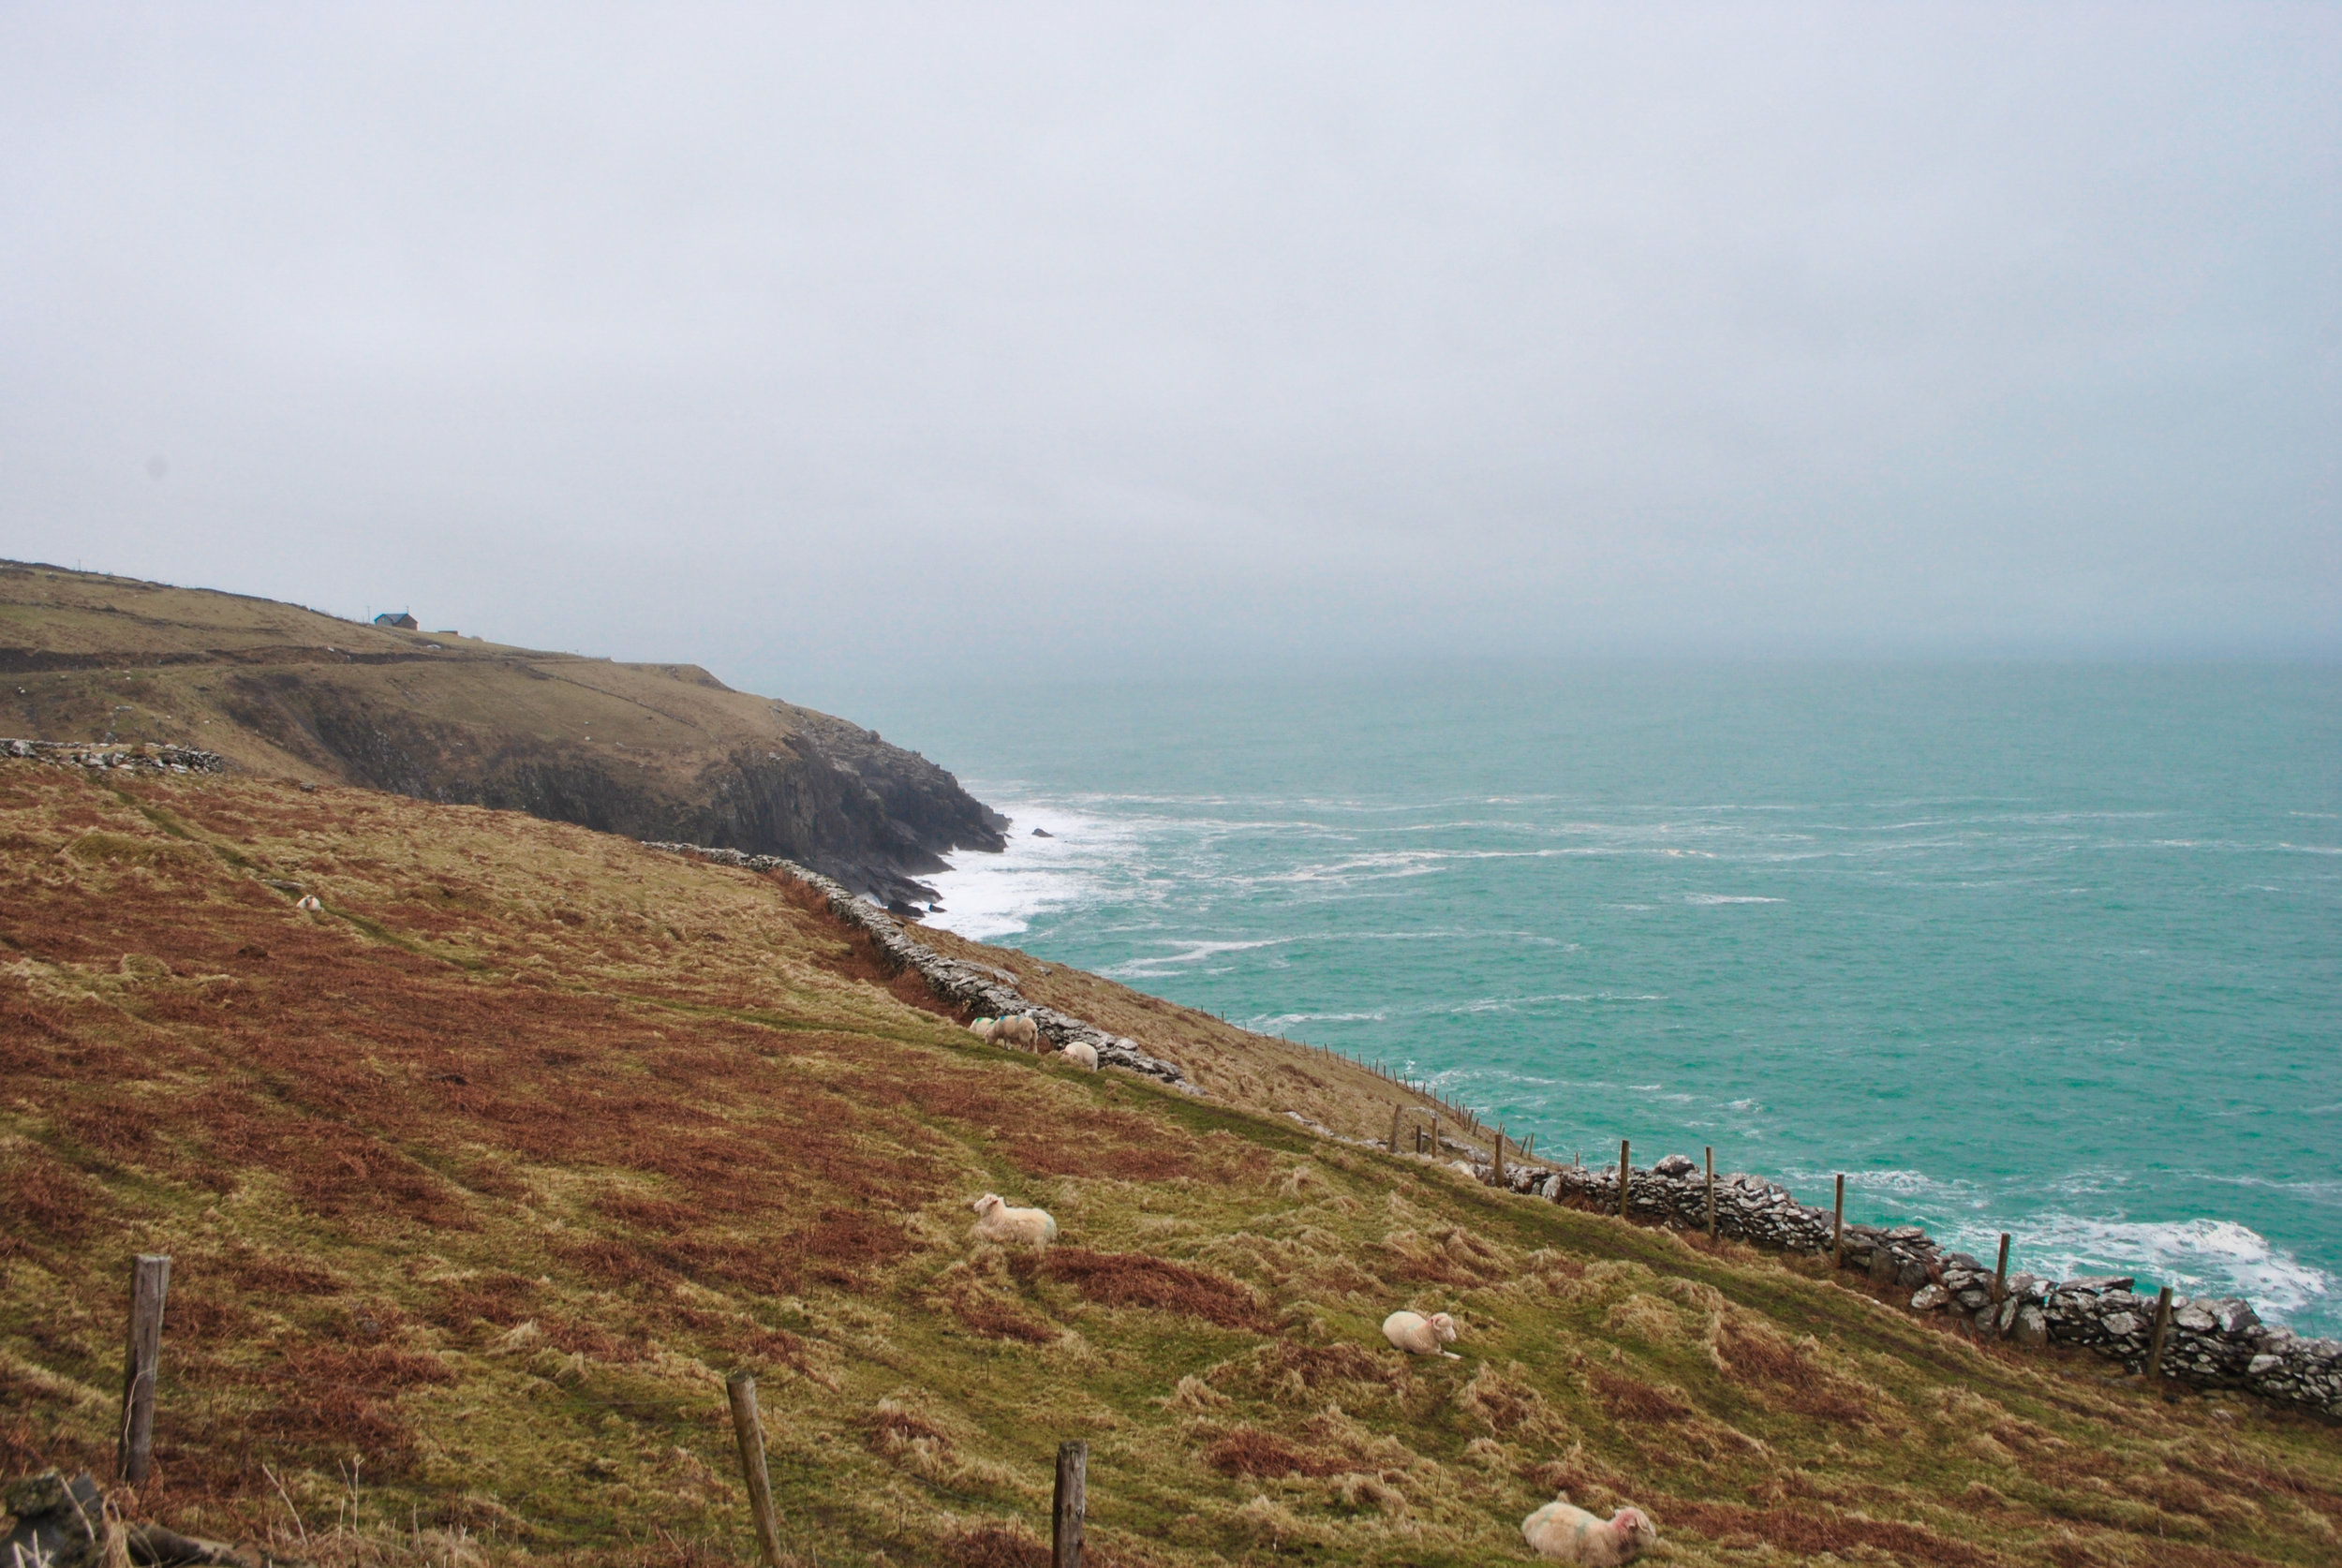   "Sheep vs. Sea"   Dingle, Ireland || April 2014 || Nikon D3000 